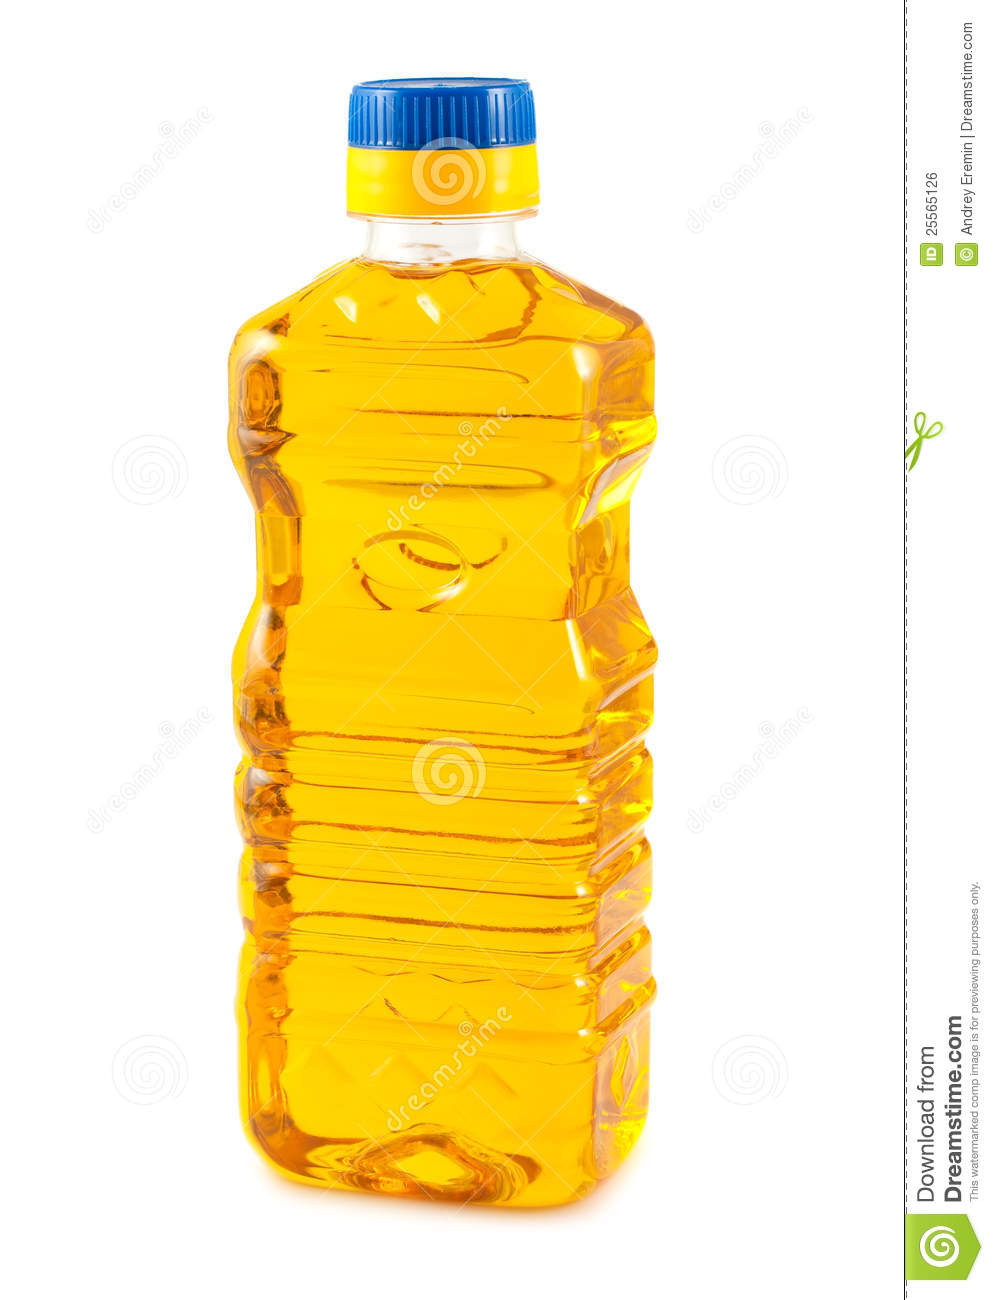 Vegetable Oil In Plastic Bottle Royalty Free Stock Image   Image